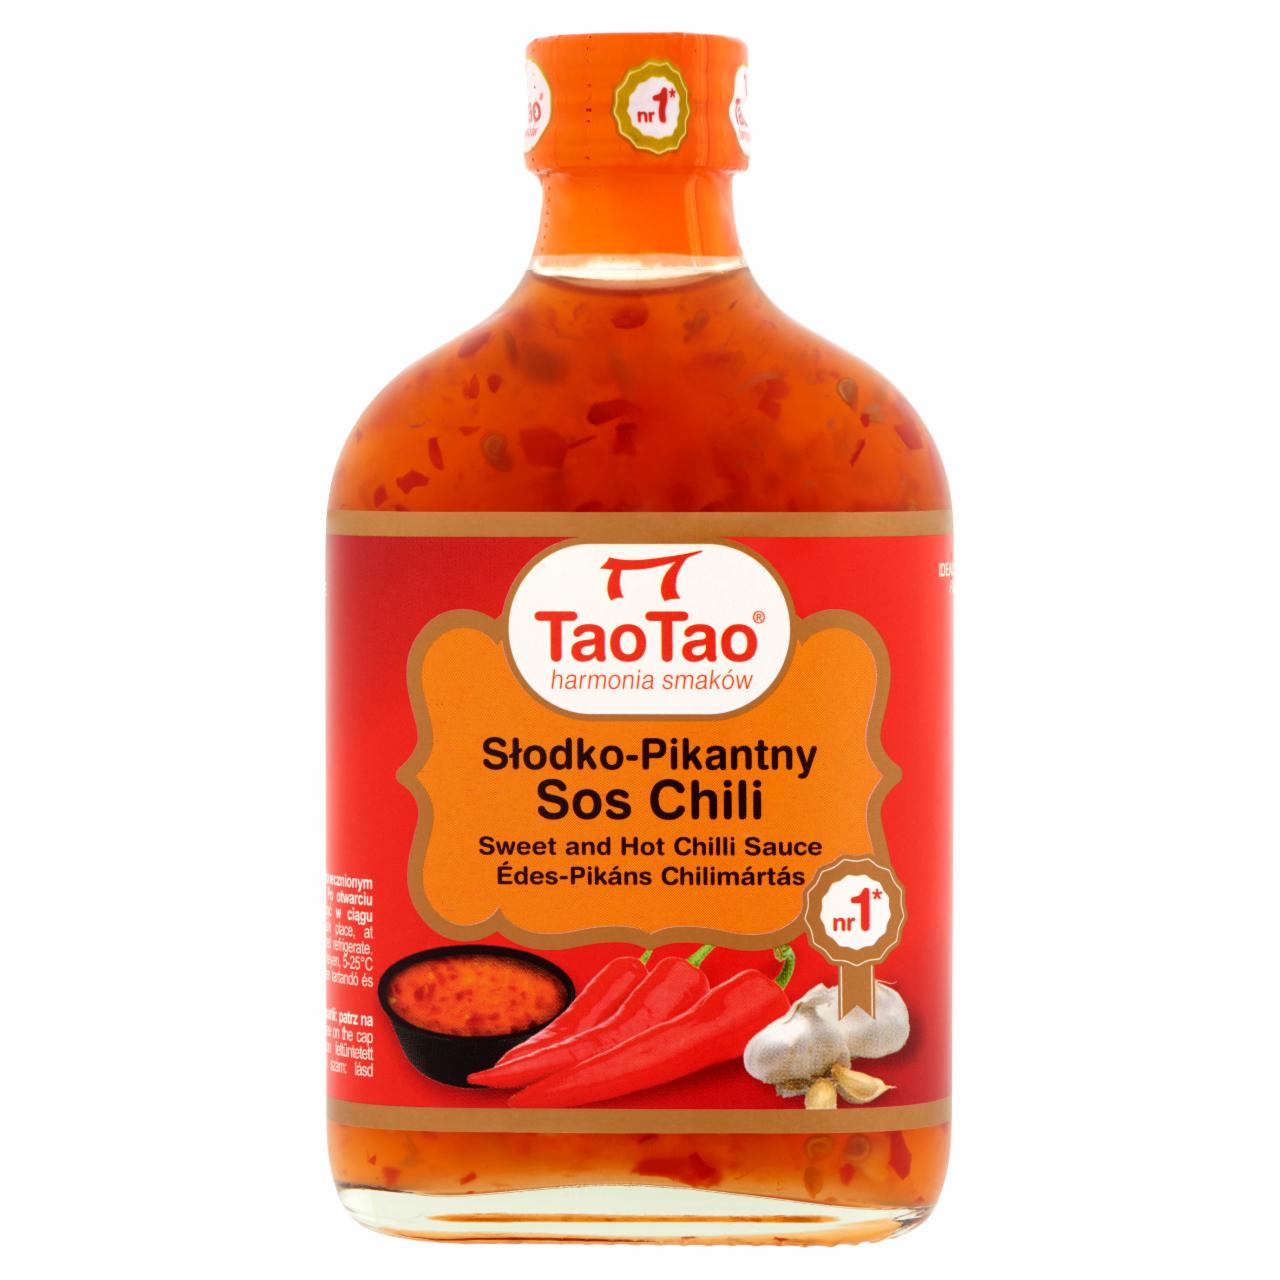 Képek - Tao Tao édes-pikáns chilimártás 175 ml